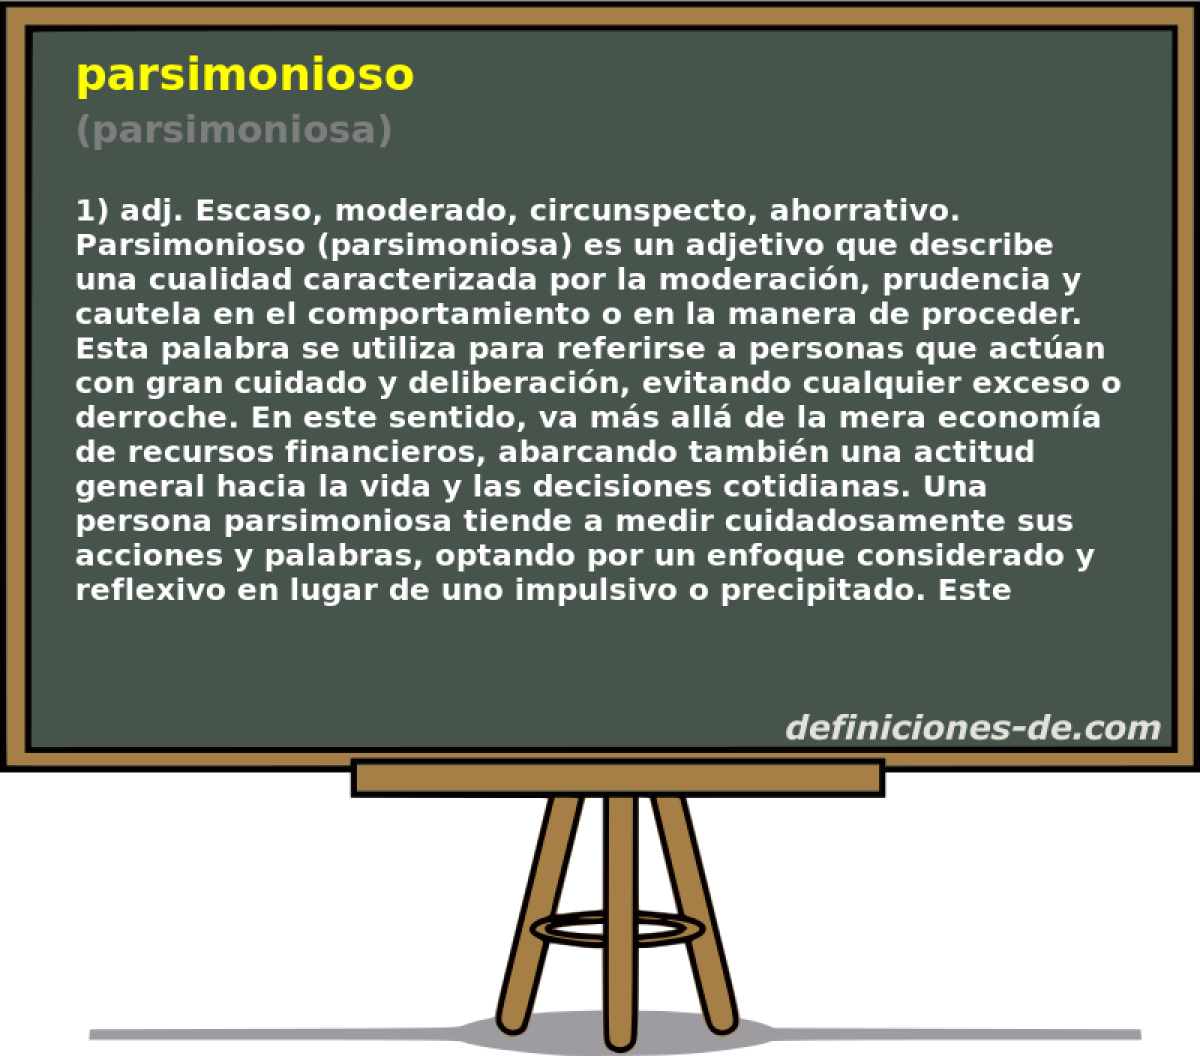 parsimonioso (parsimoniosa)